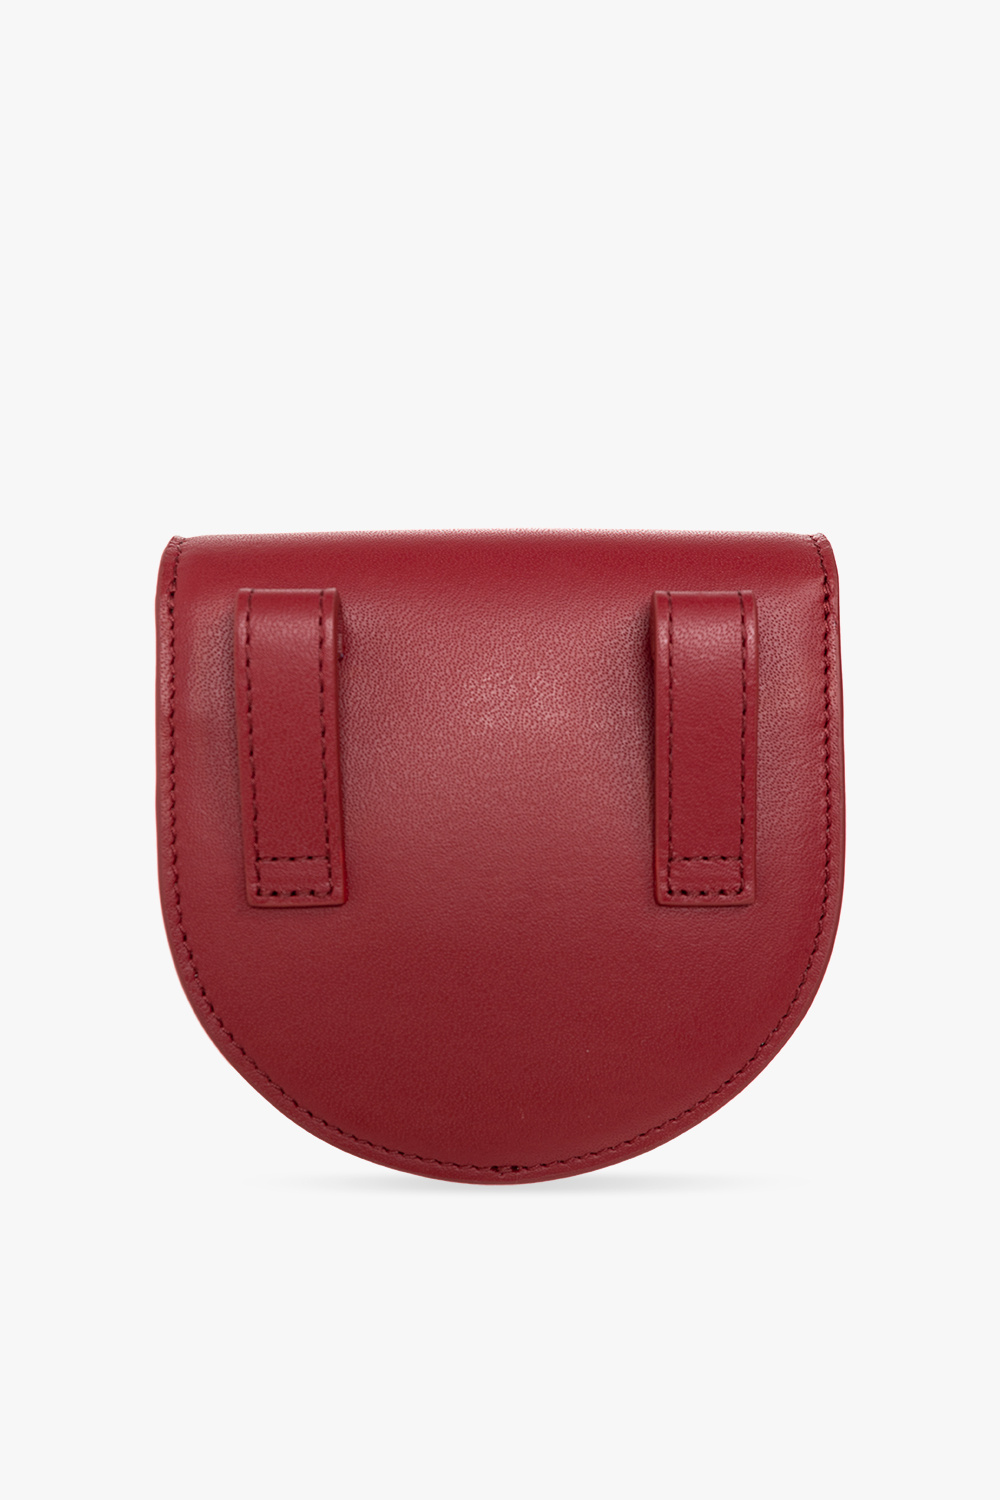 Vivienne Westwood ‘Nano Saddle’ shoulder double-zip bag